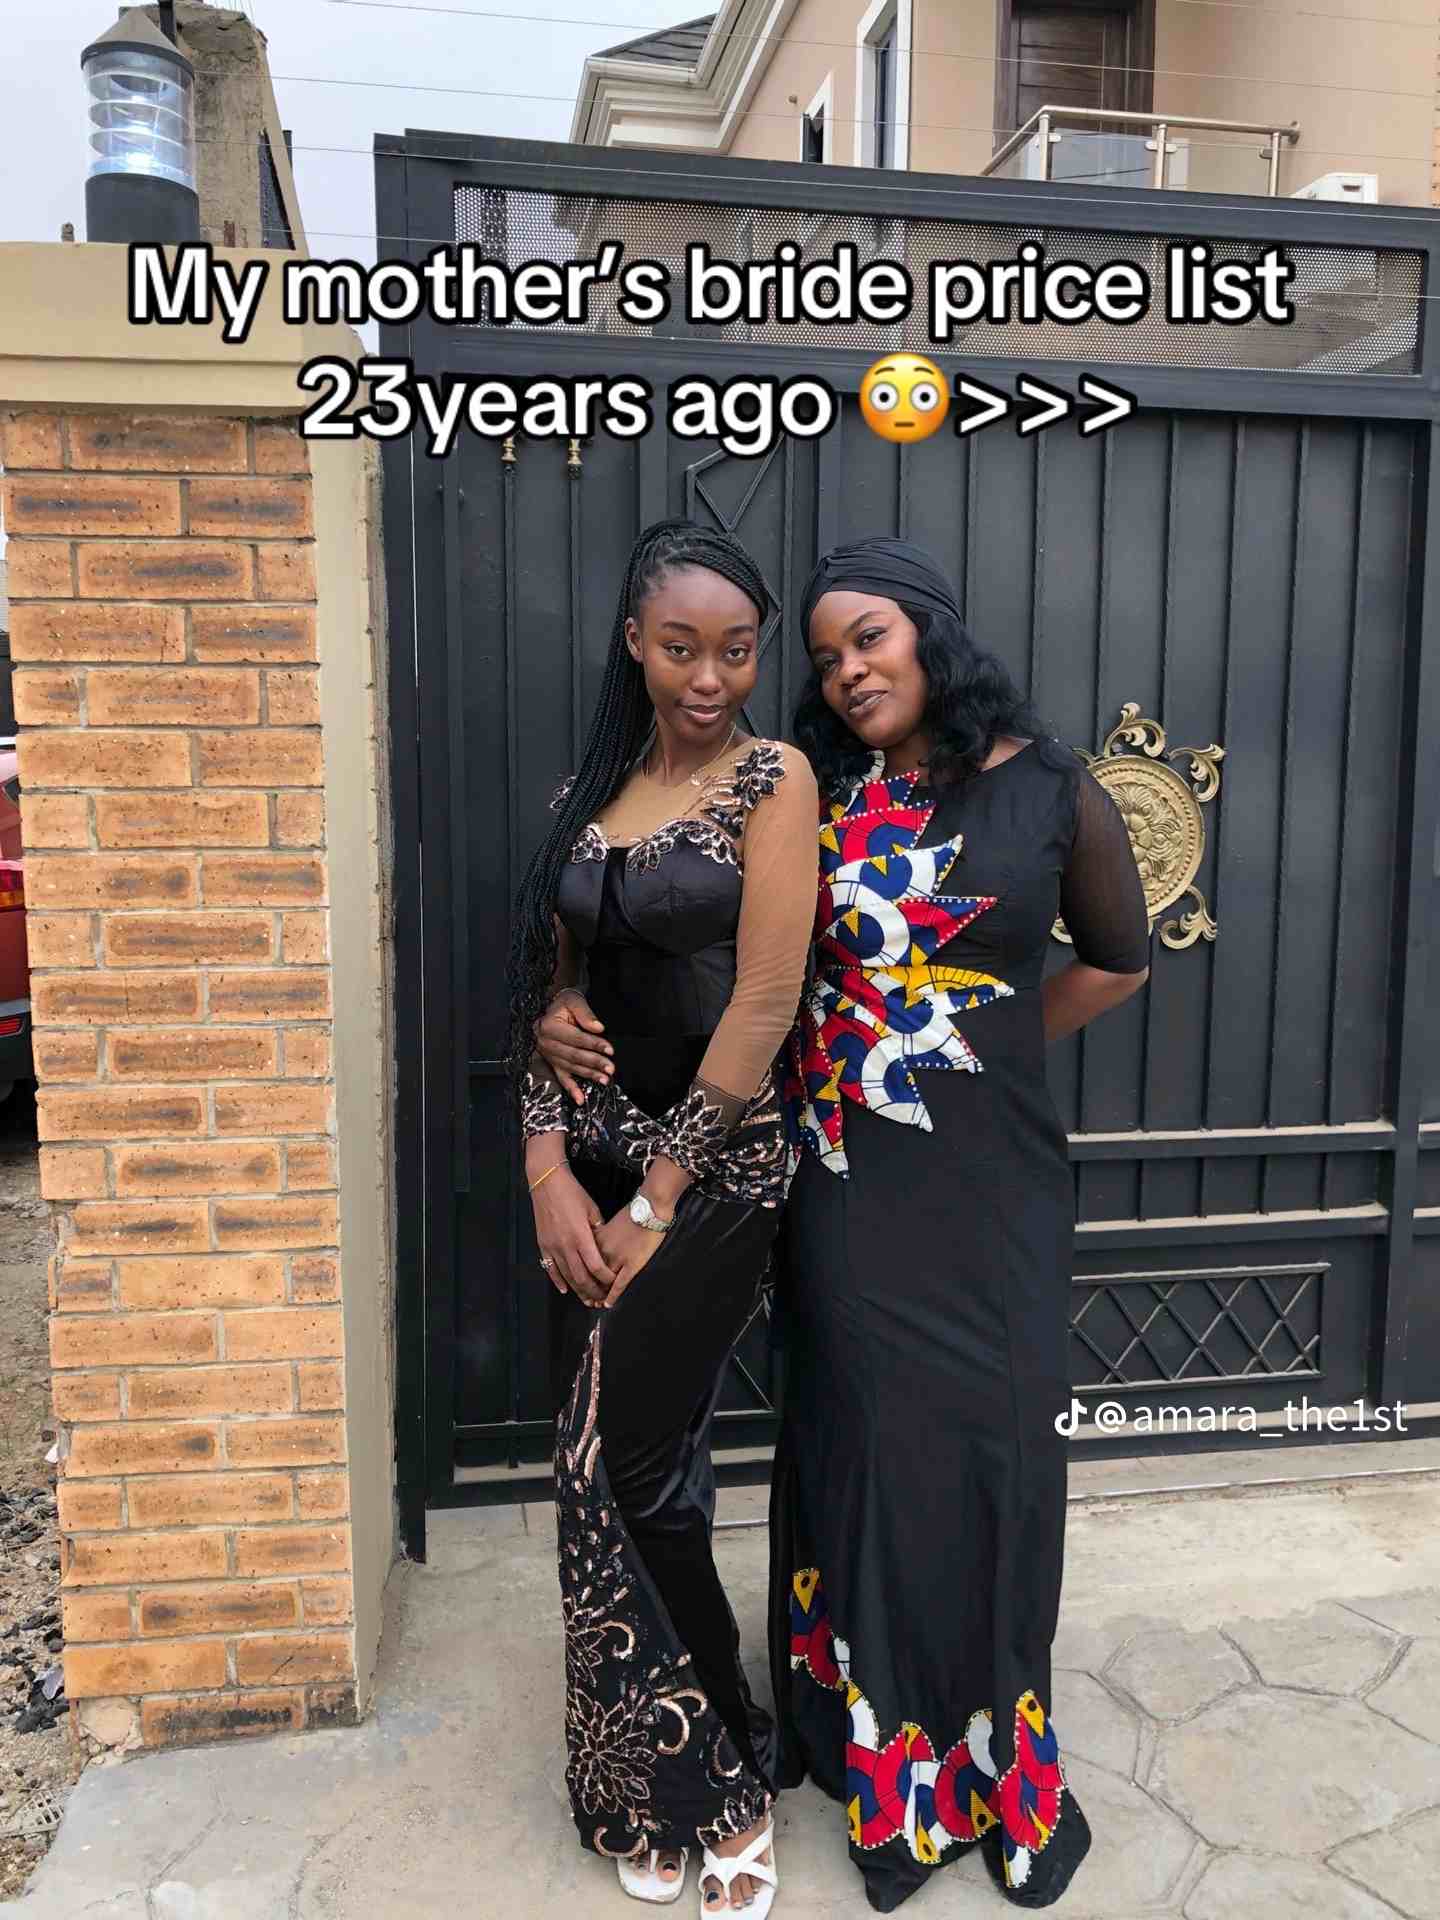 Lady mom's bride price list 23 years